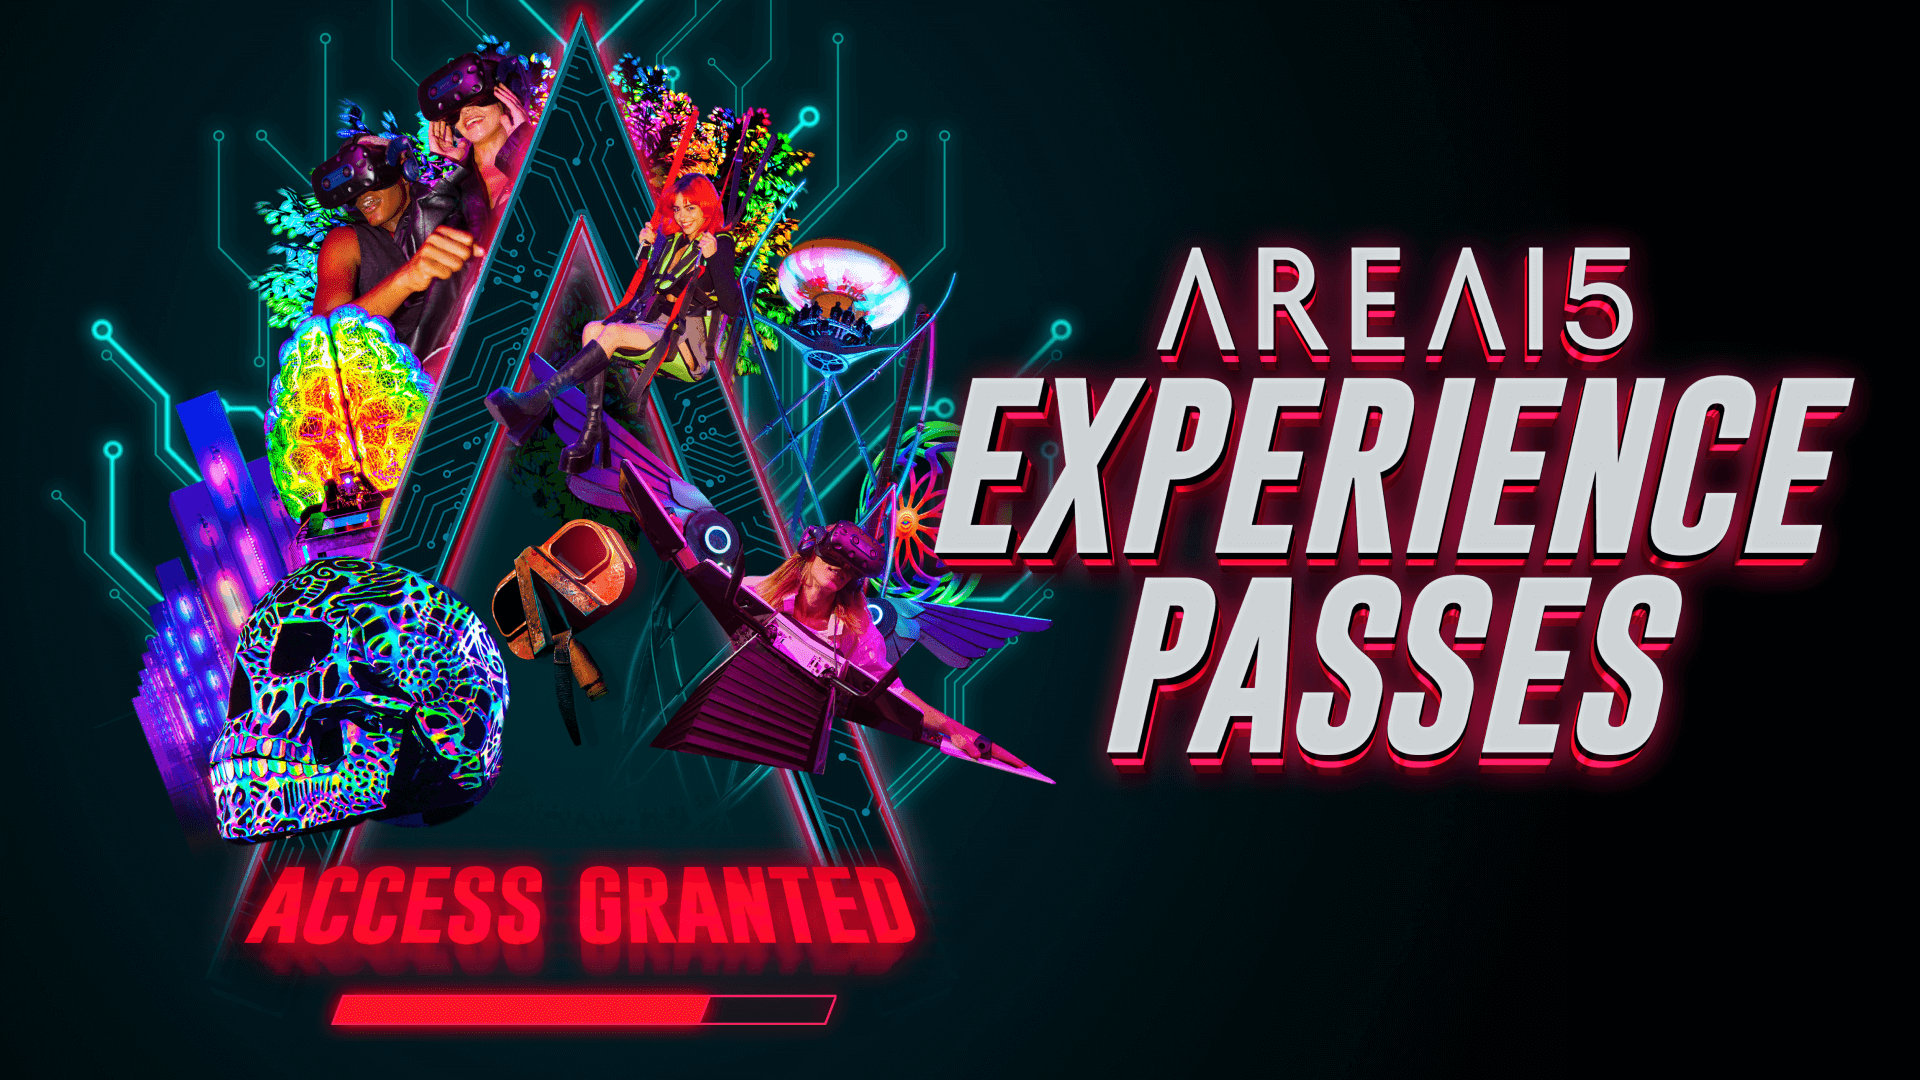 AREA15 Experience Passes - Ticket Passes + Bundles